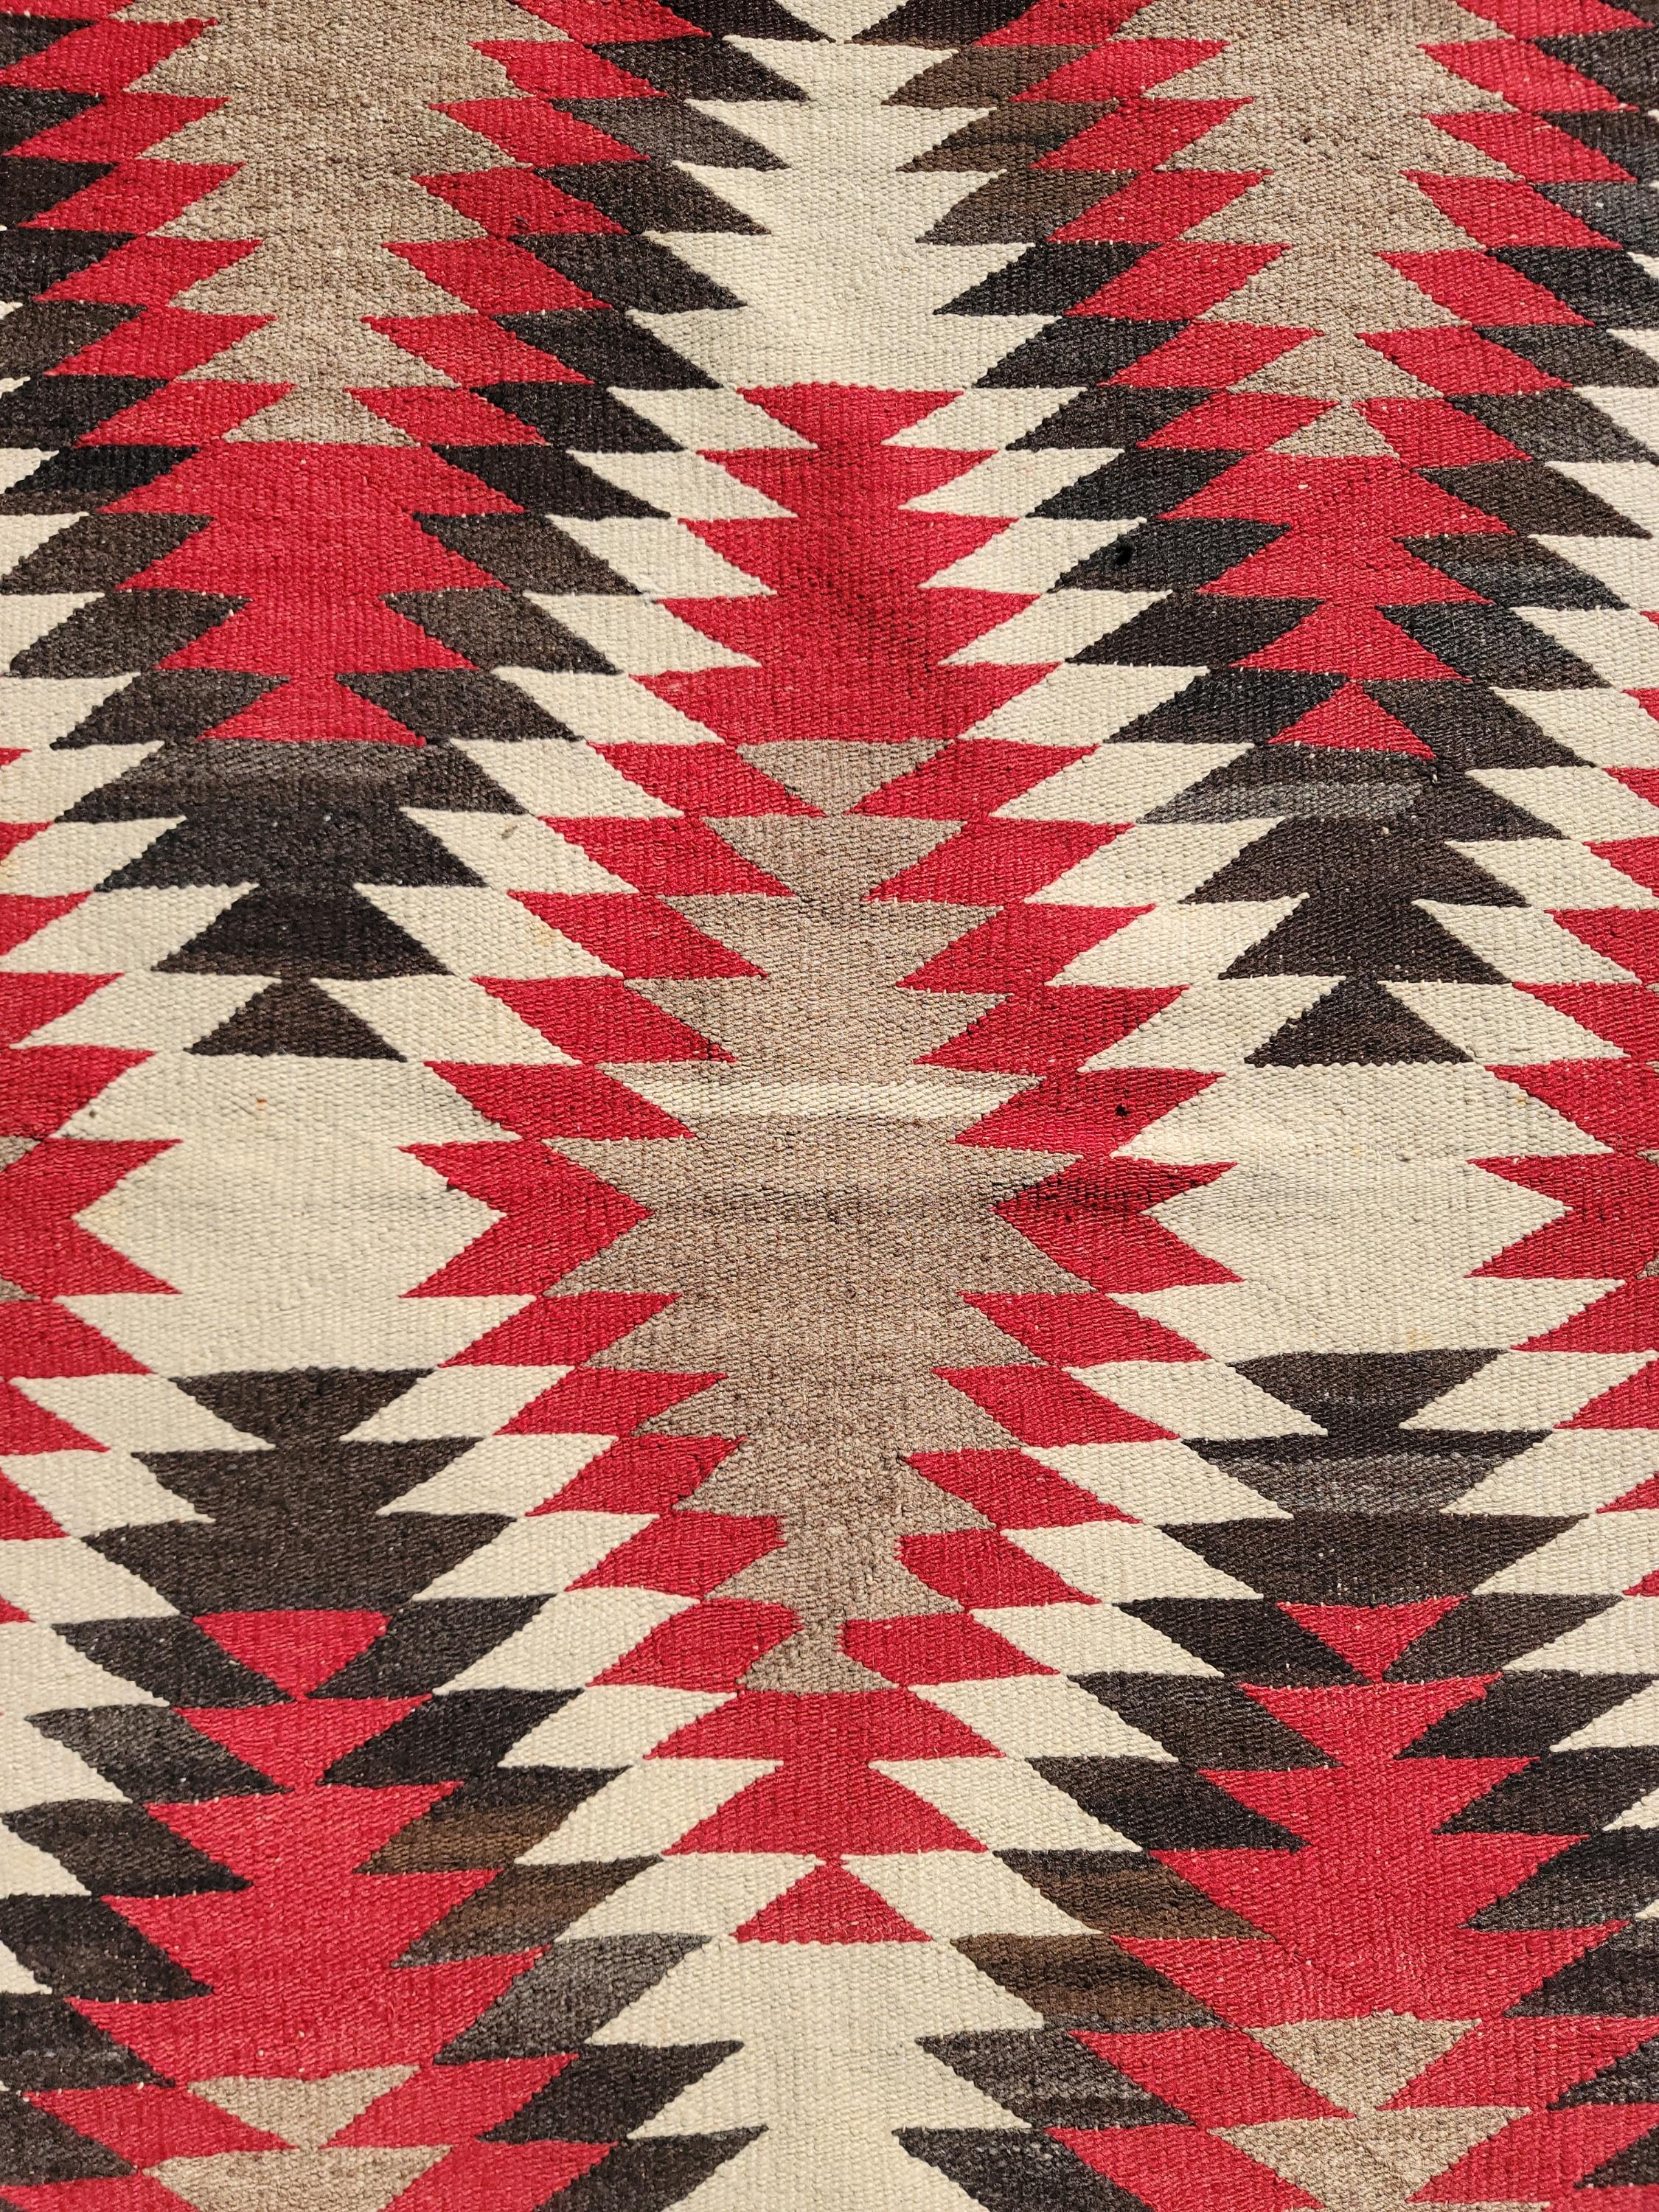 Adirondack Early Navajo Geometric Weaving For Sale